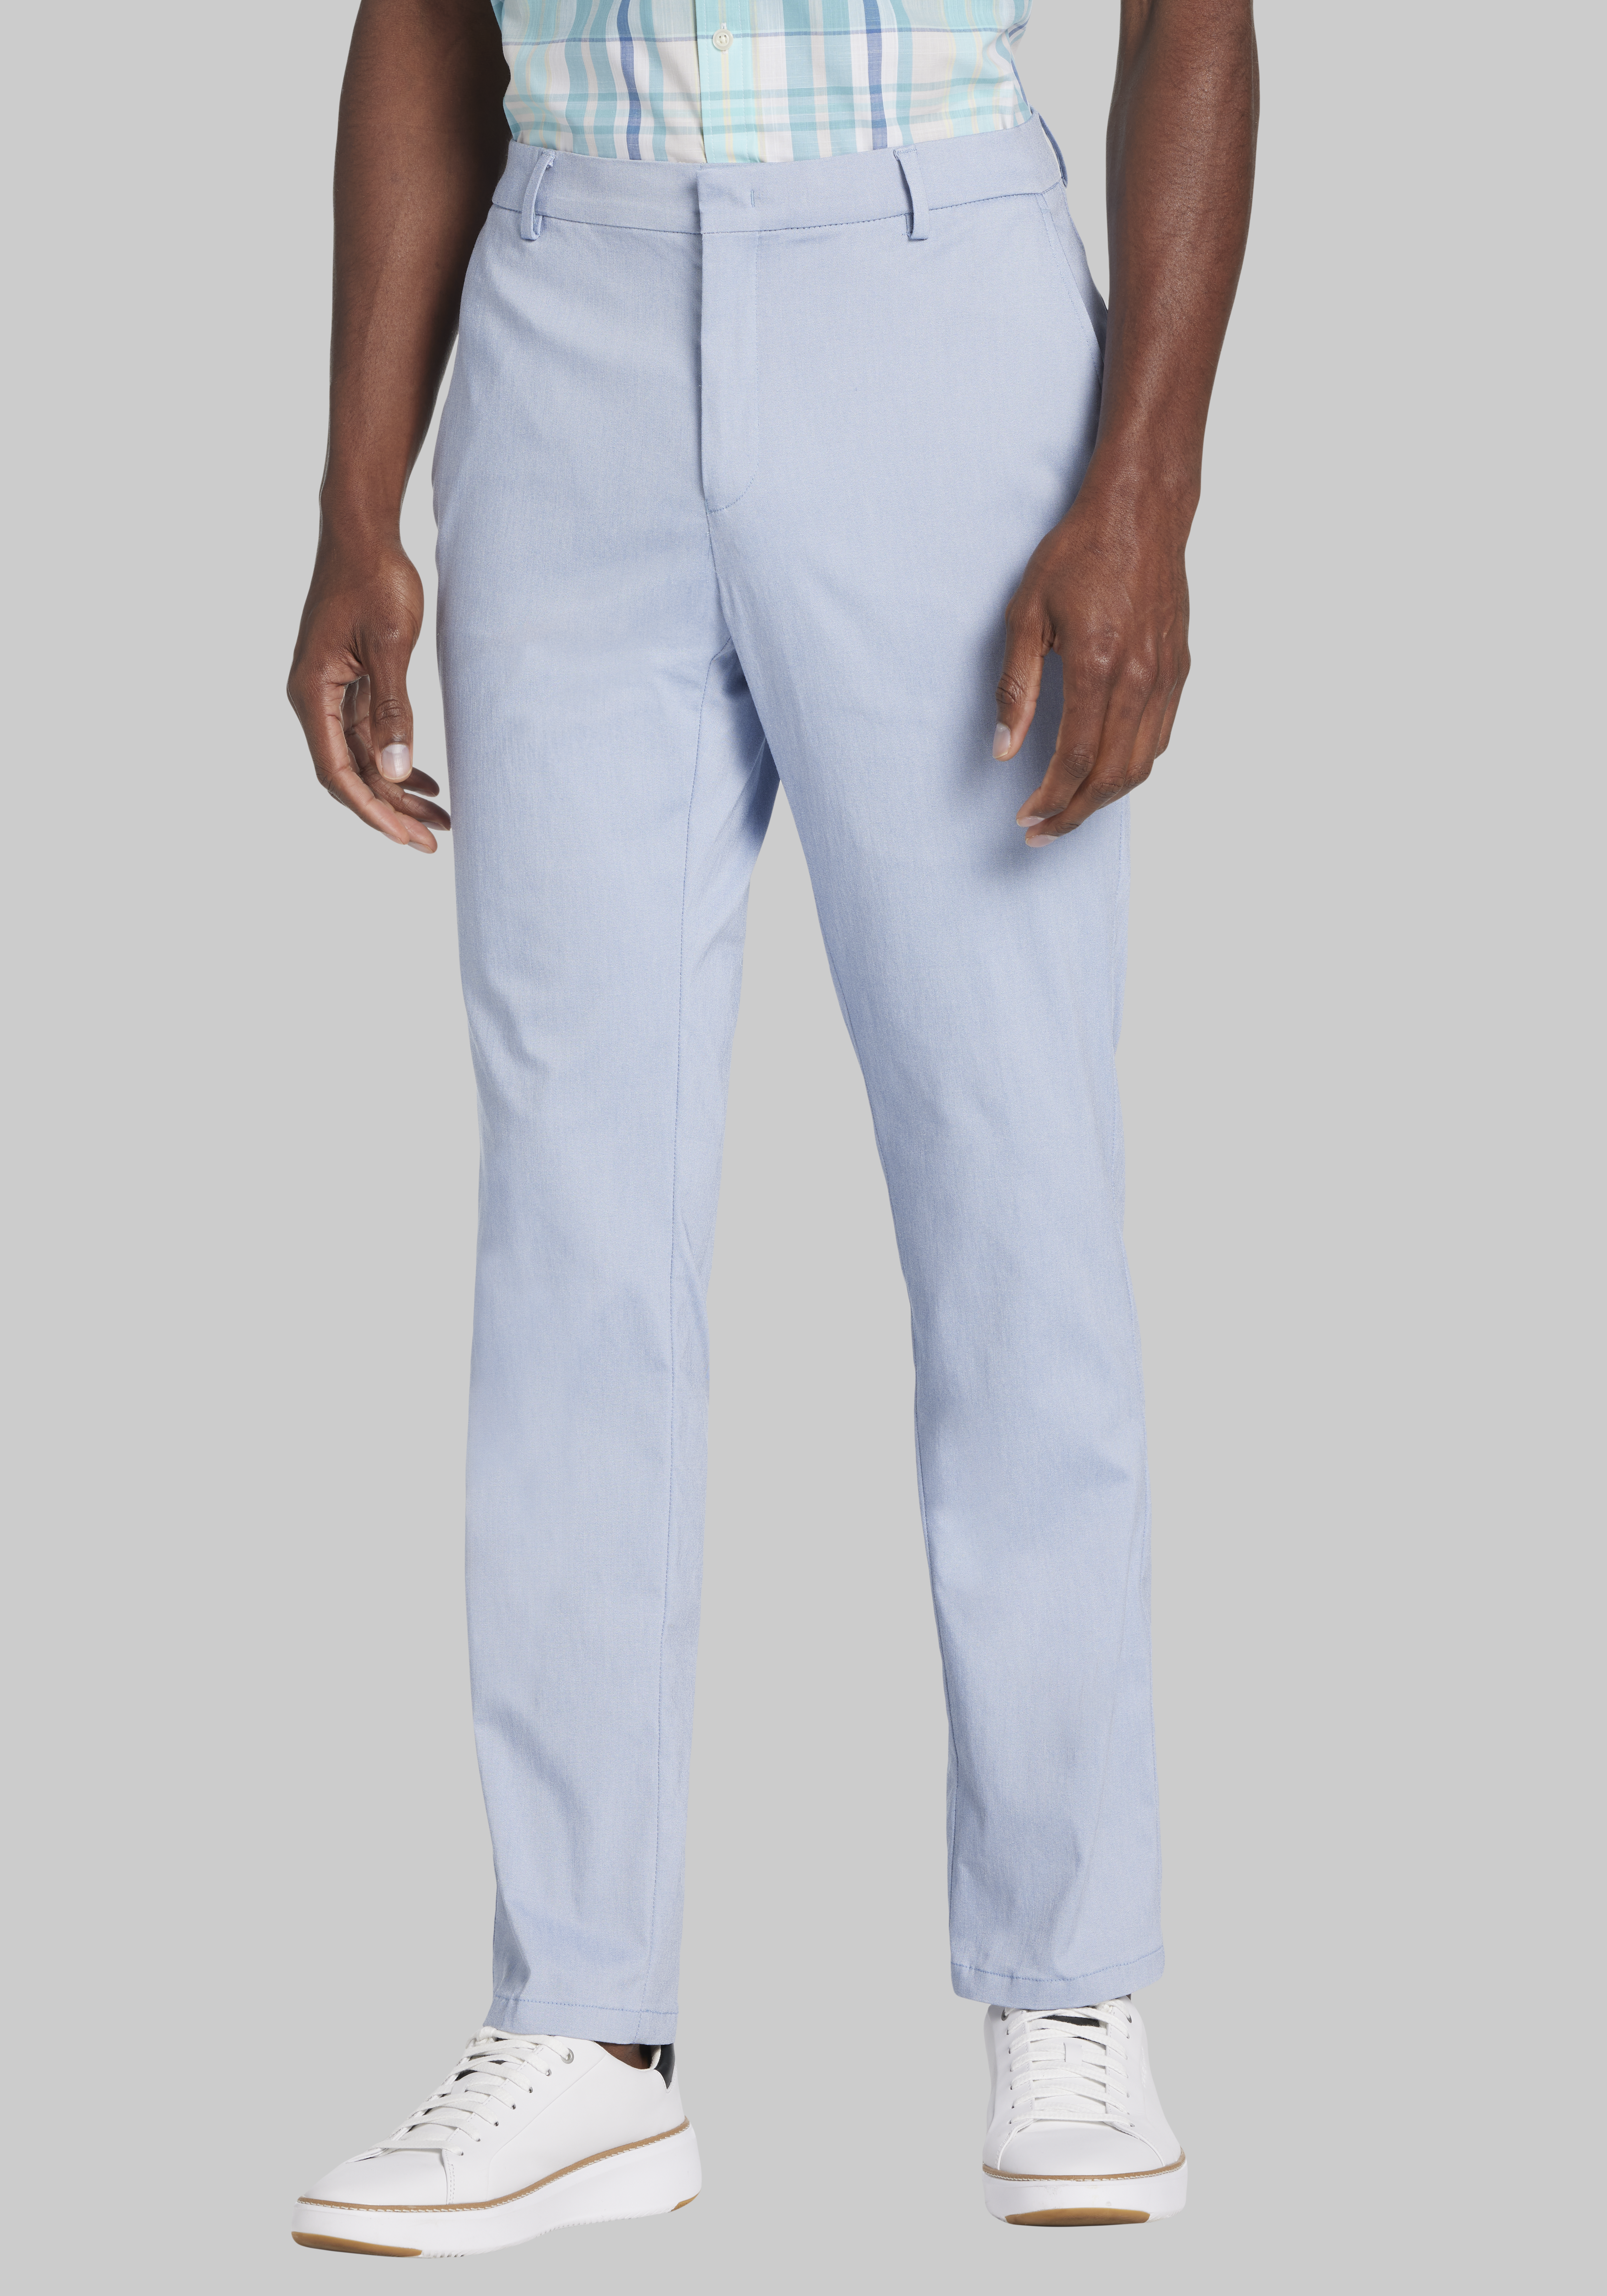 New Balance Men's All Motion Golf Pants Grey Blue Comfort Fit